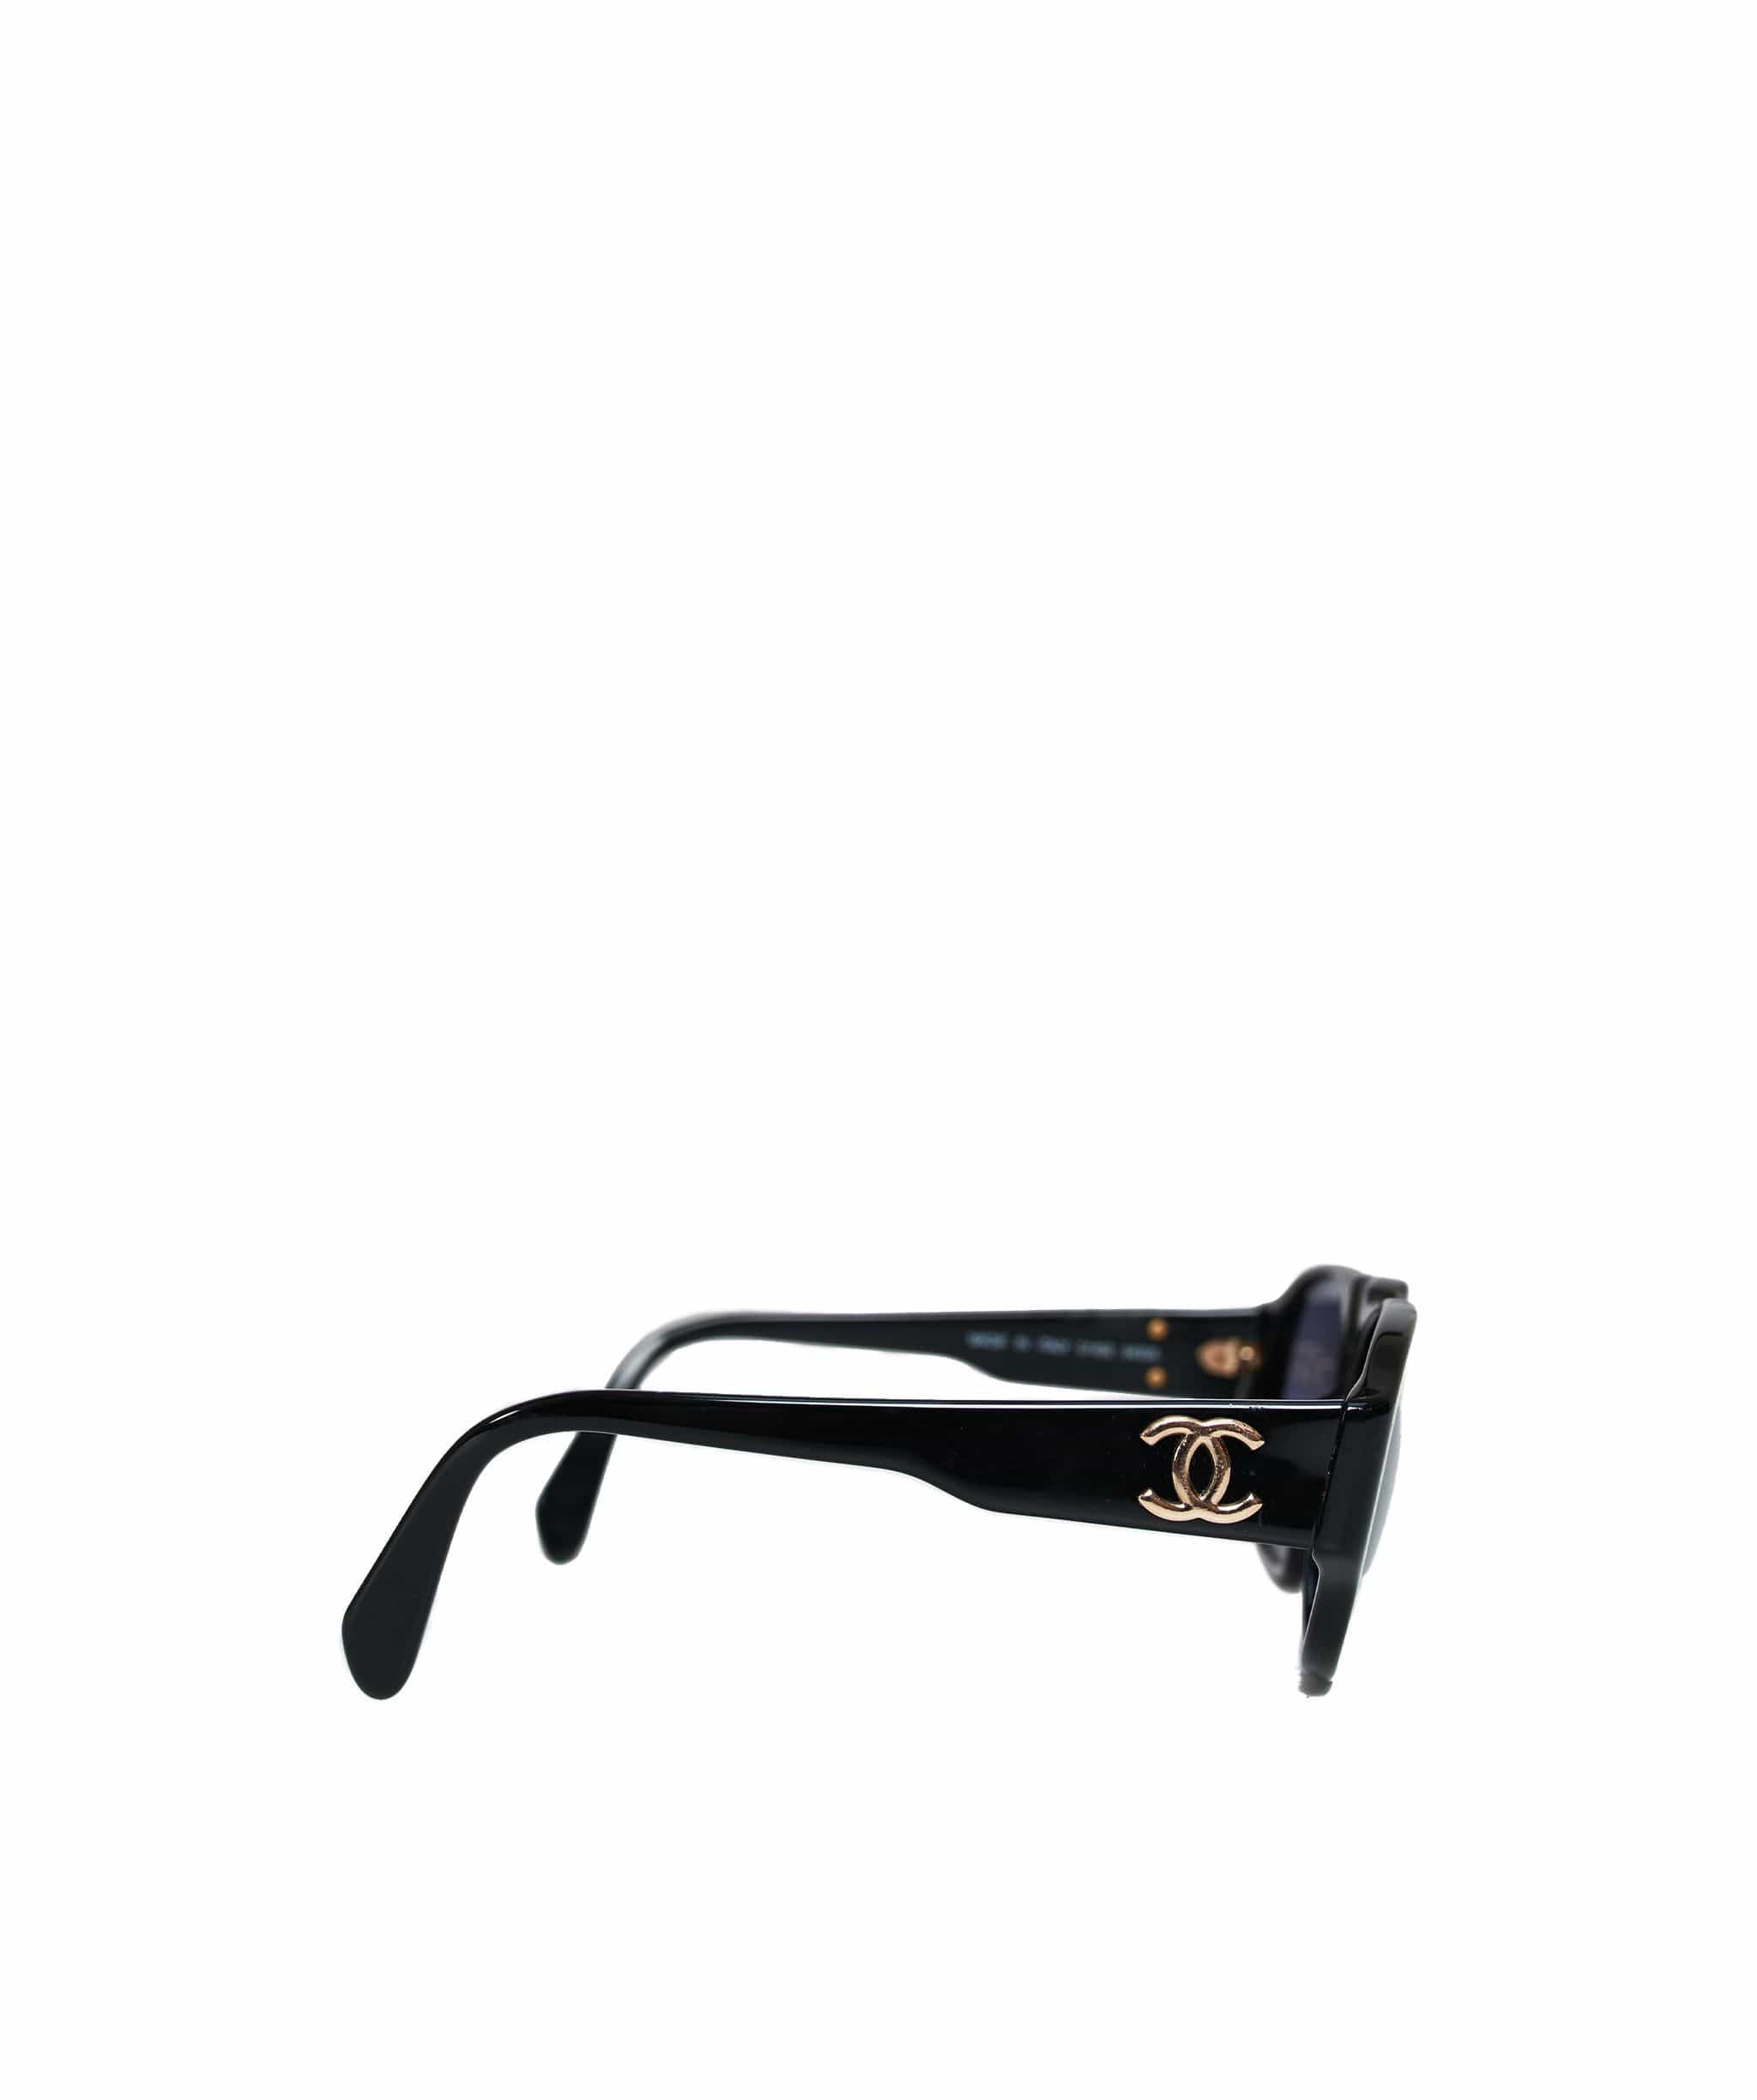 Chanel Chanel sunglasses  ADL1002